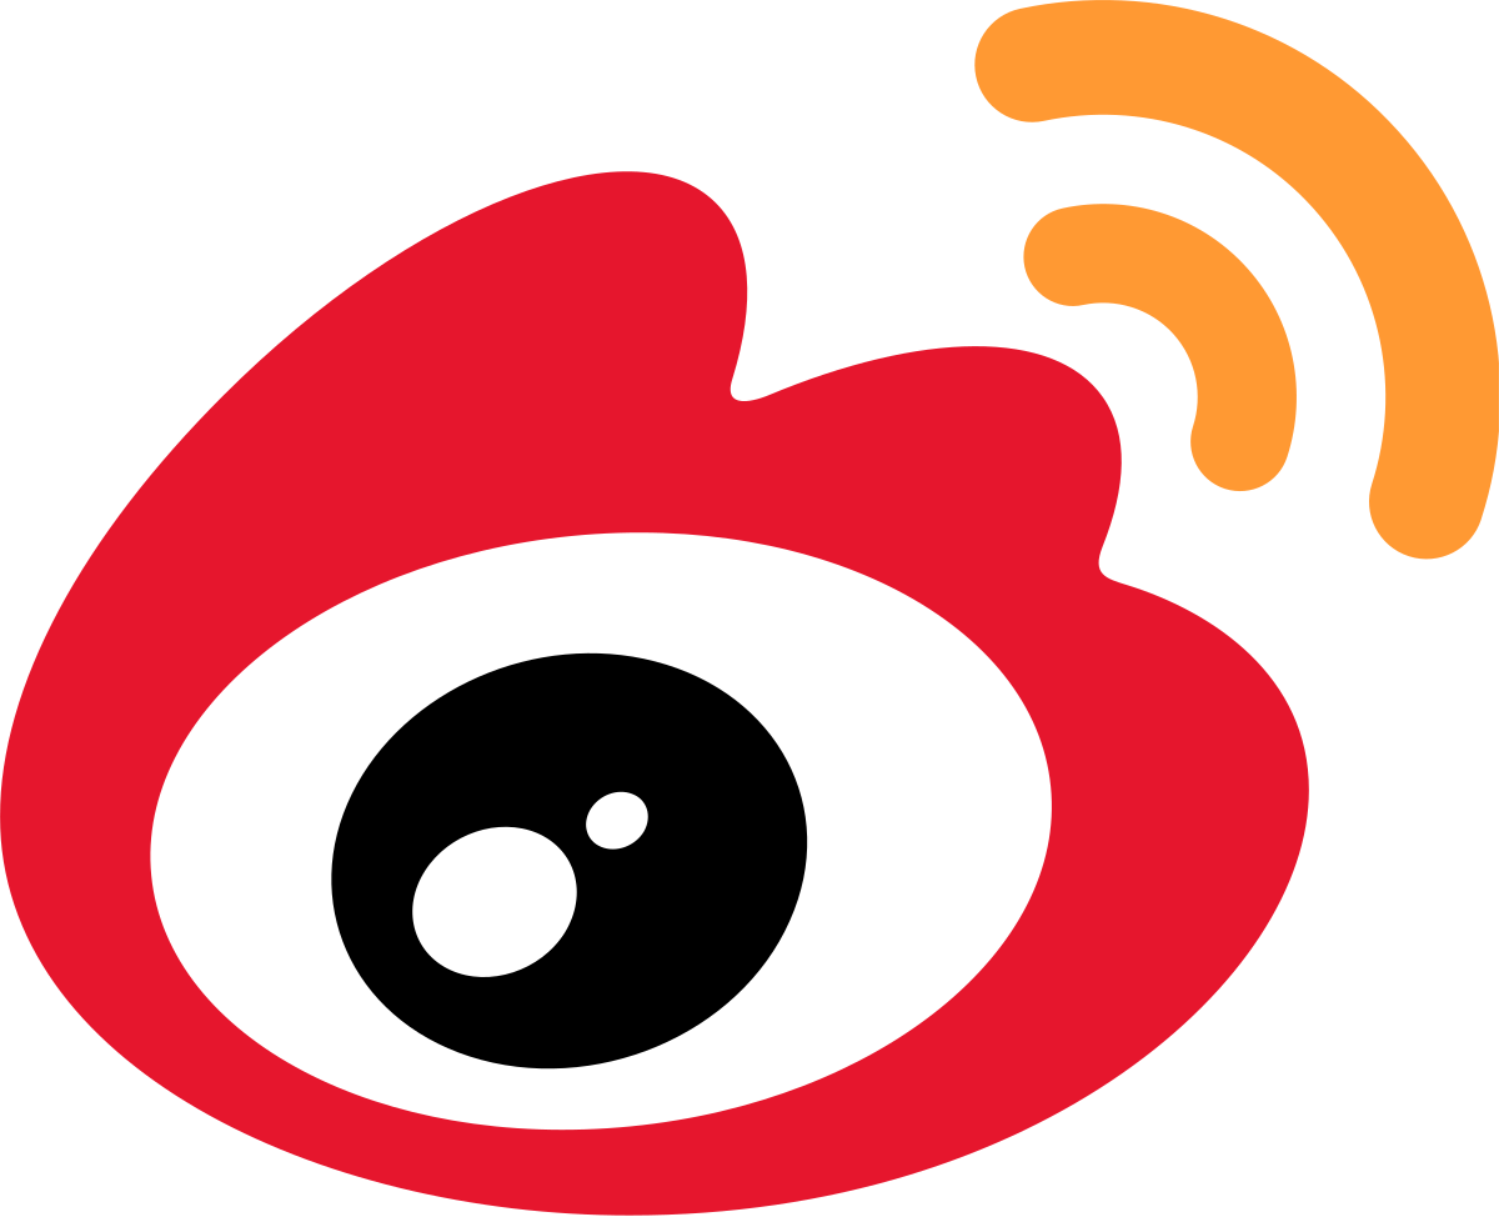 Weibo Shares Drop After Q3 Miss; Revenue Declined 25%, Margins Shrank As Economic & Regulatory Headwinds Take Toll